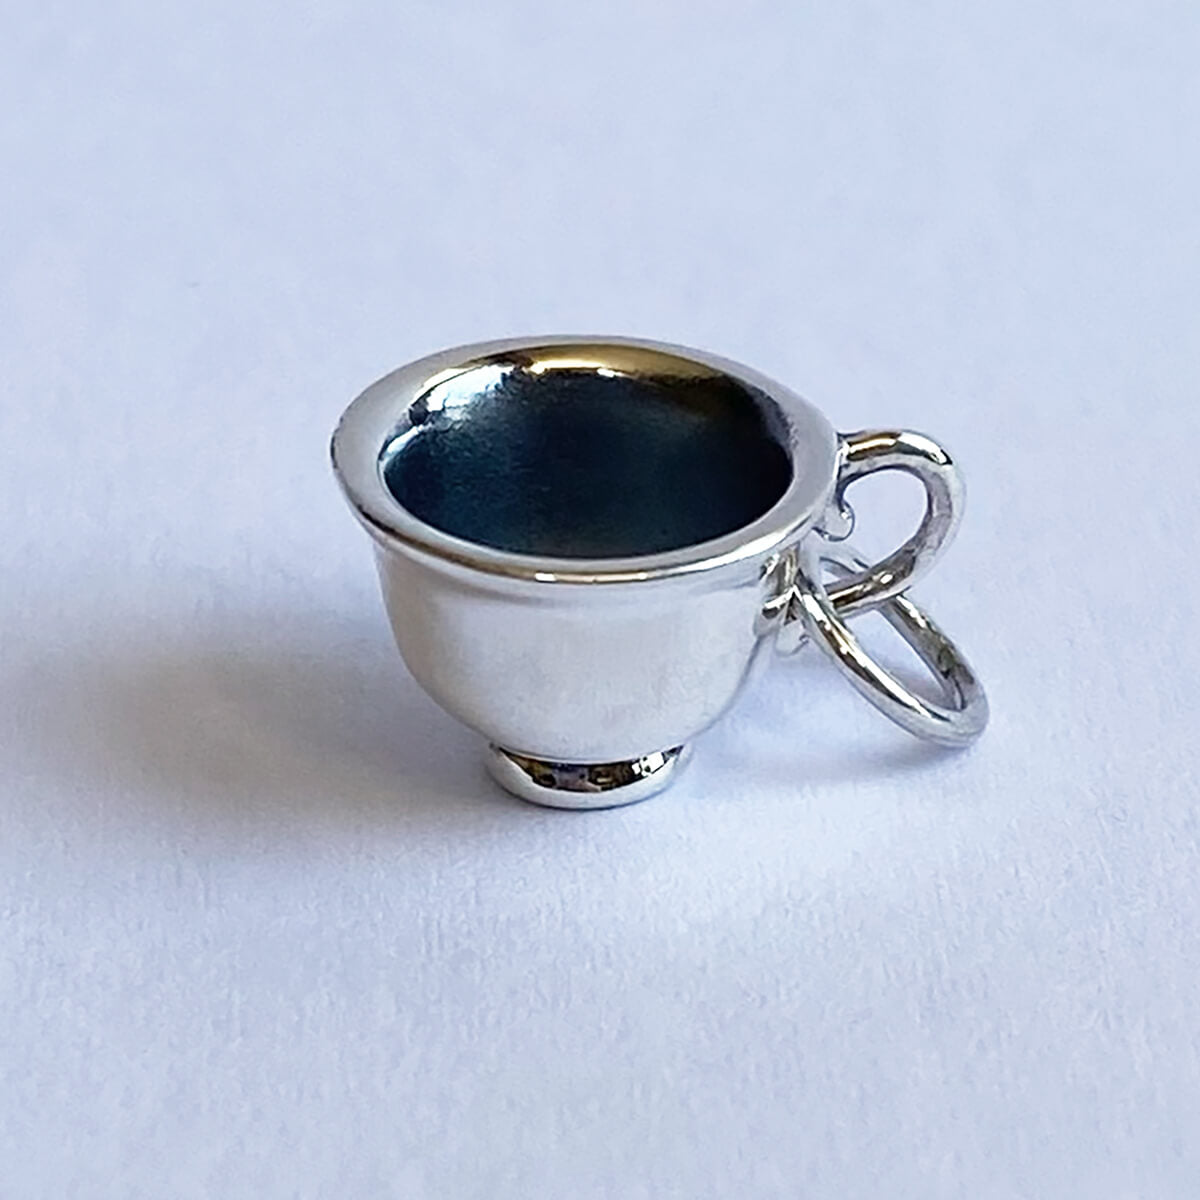 Teacup Charm Sterling silver high tea pendant